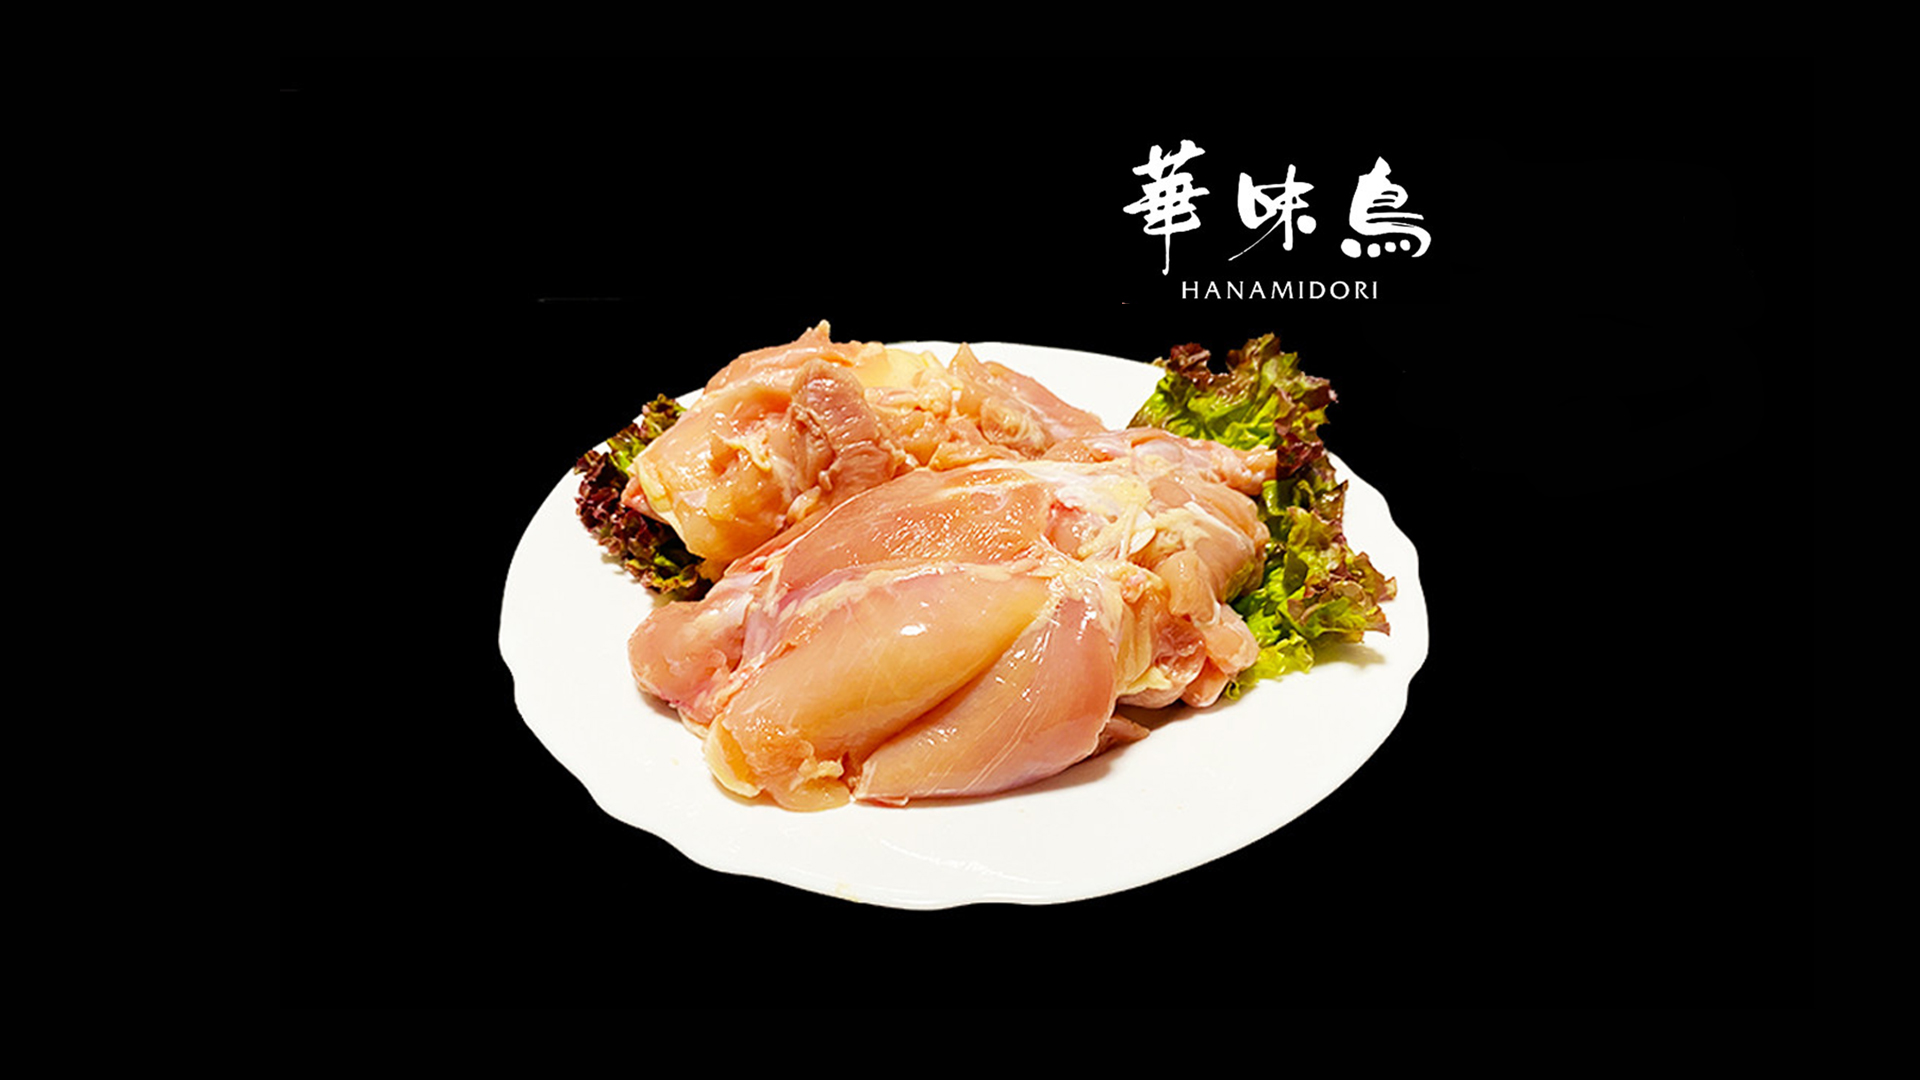 佐賀県唐津市産華味鳥もも肉
華味鳥